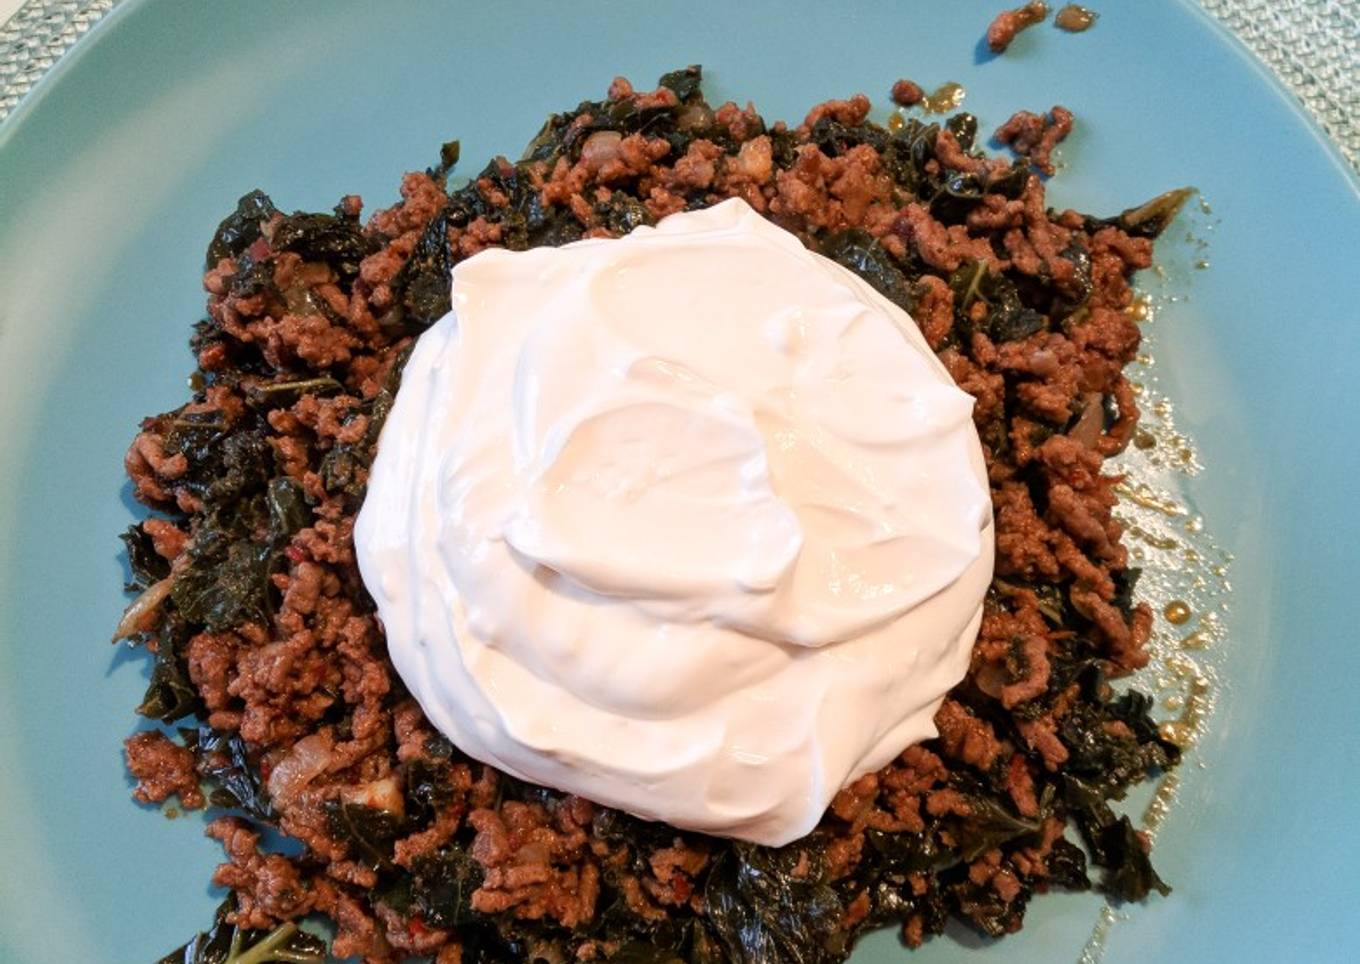 Kale with minced beef and garlic yogurt sauce